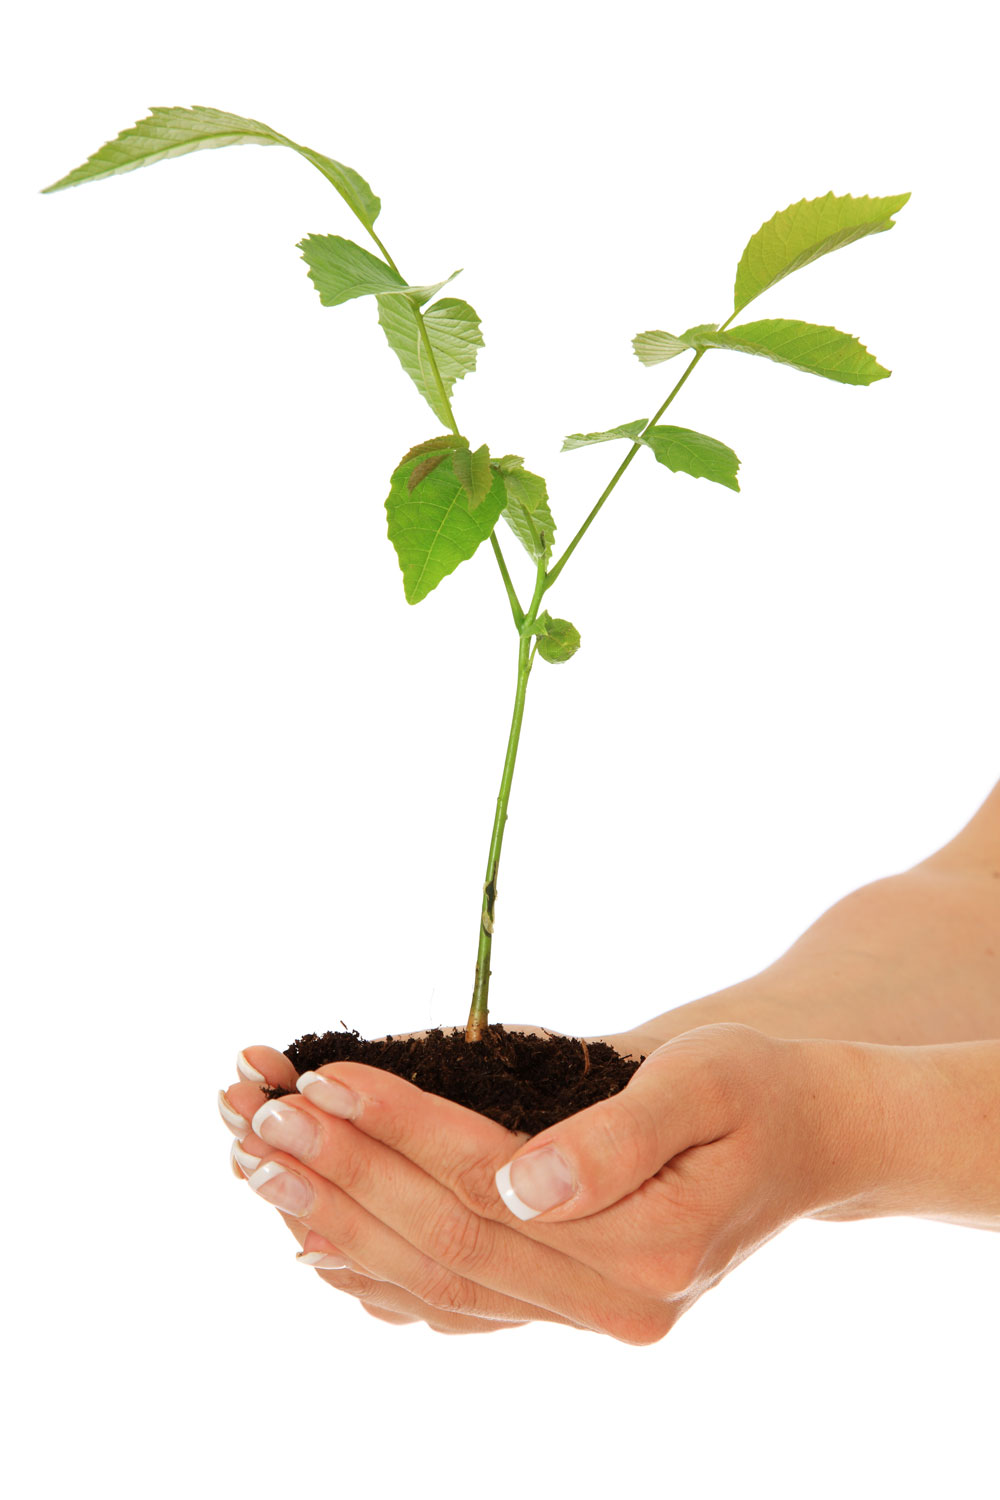 ROTERS Umwelt - Hand mit Pflanze